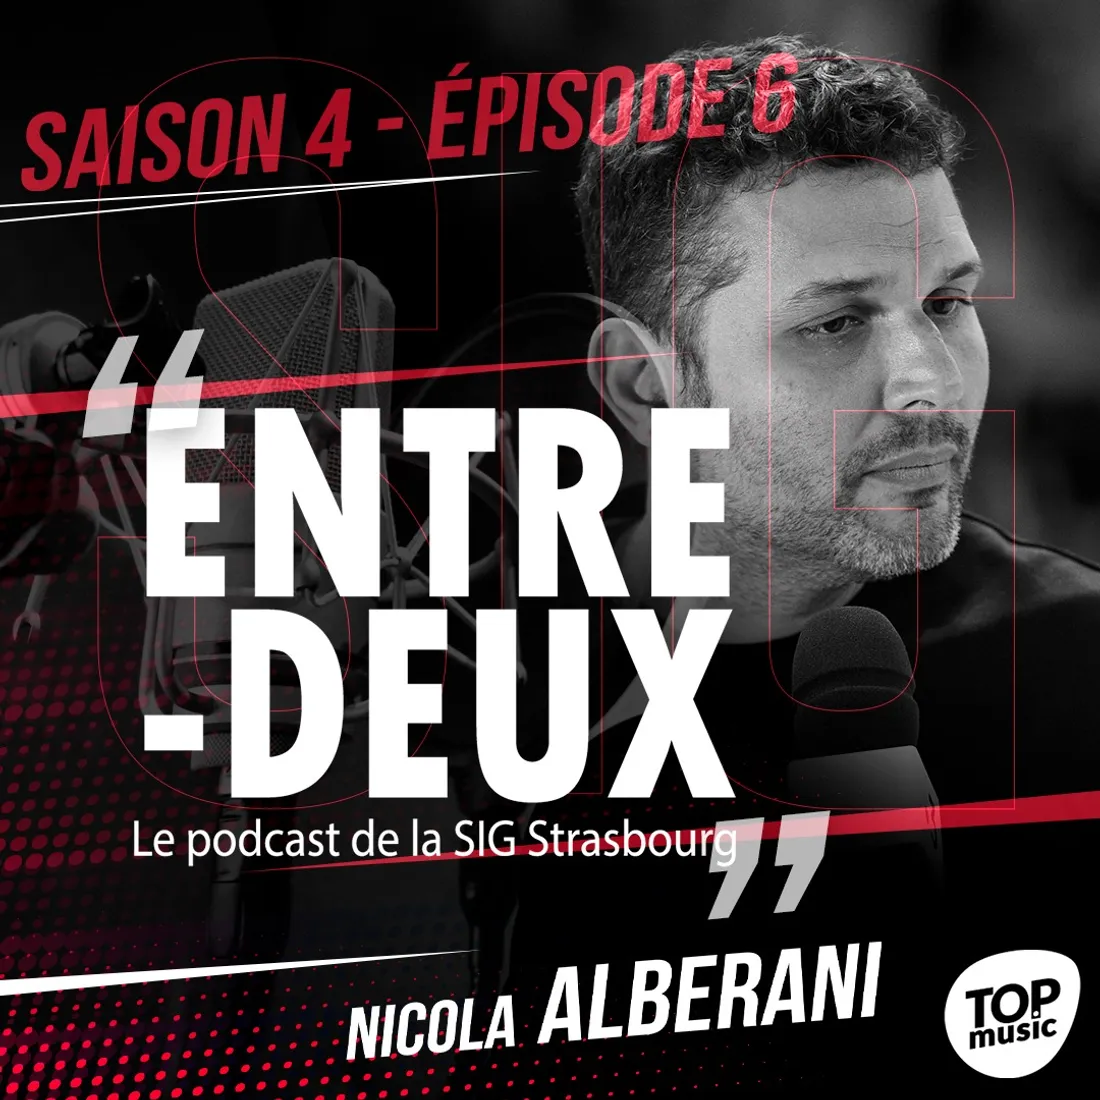 ENTRE-DEUX / Saison 4 / Ep. 6 - Nicola Alberani